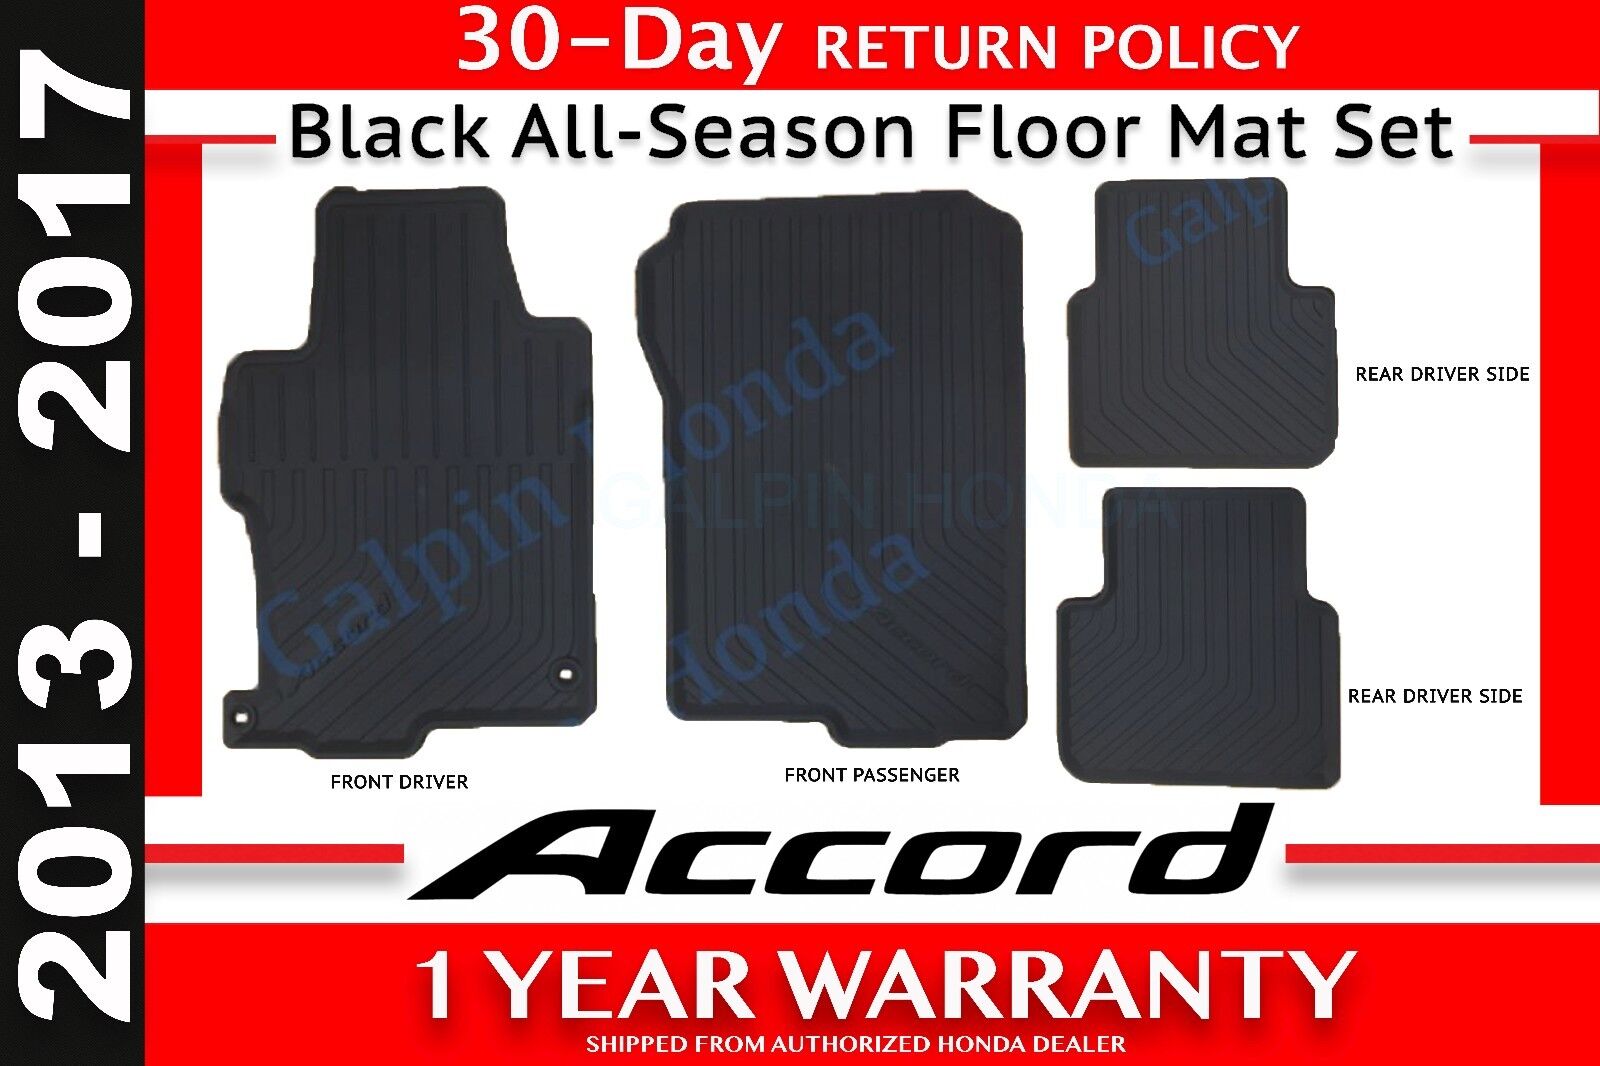 Genuine OEM Honda Accord 4-DR Black All Season Floor Mat Set 13-17 08P13-T2A-110